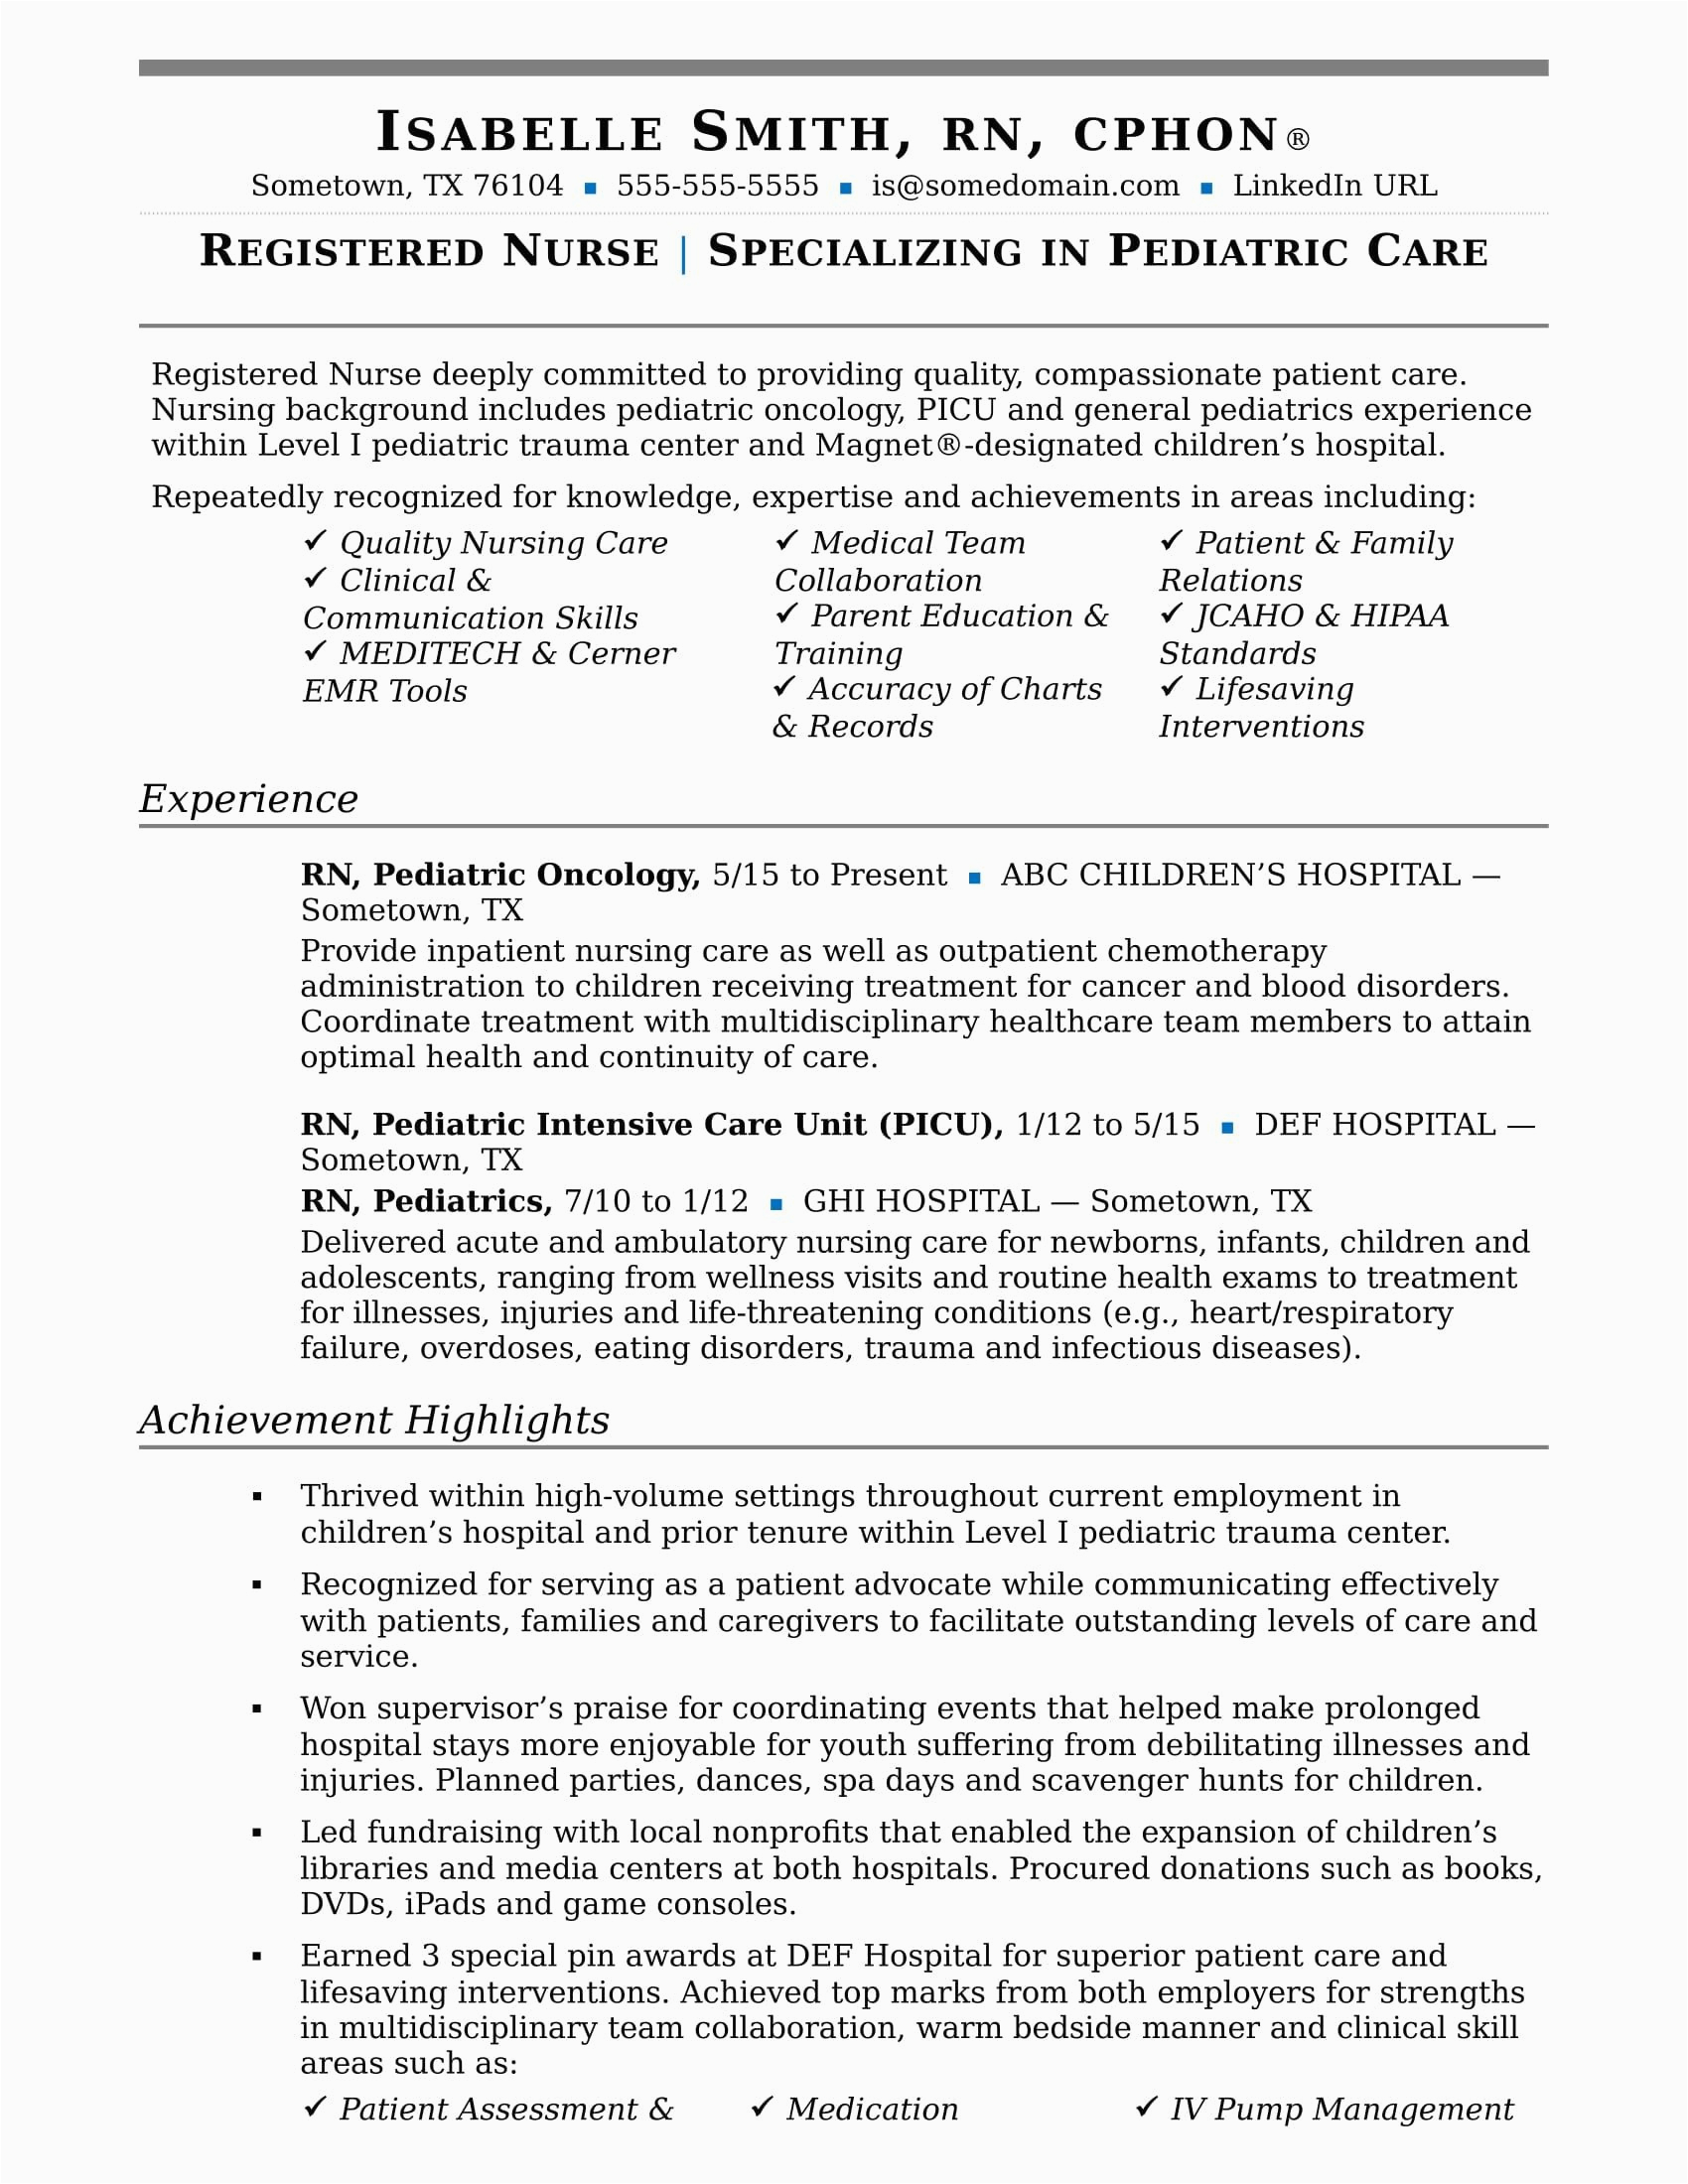 Sample Resume for Company Nurse with Job Description Nurse Resume Sample